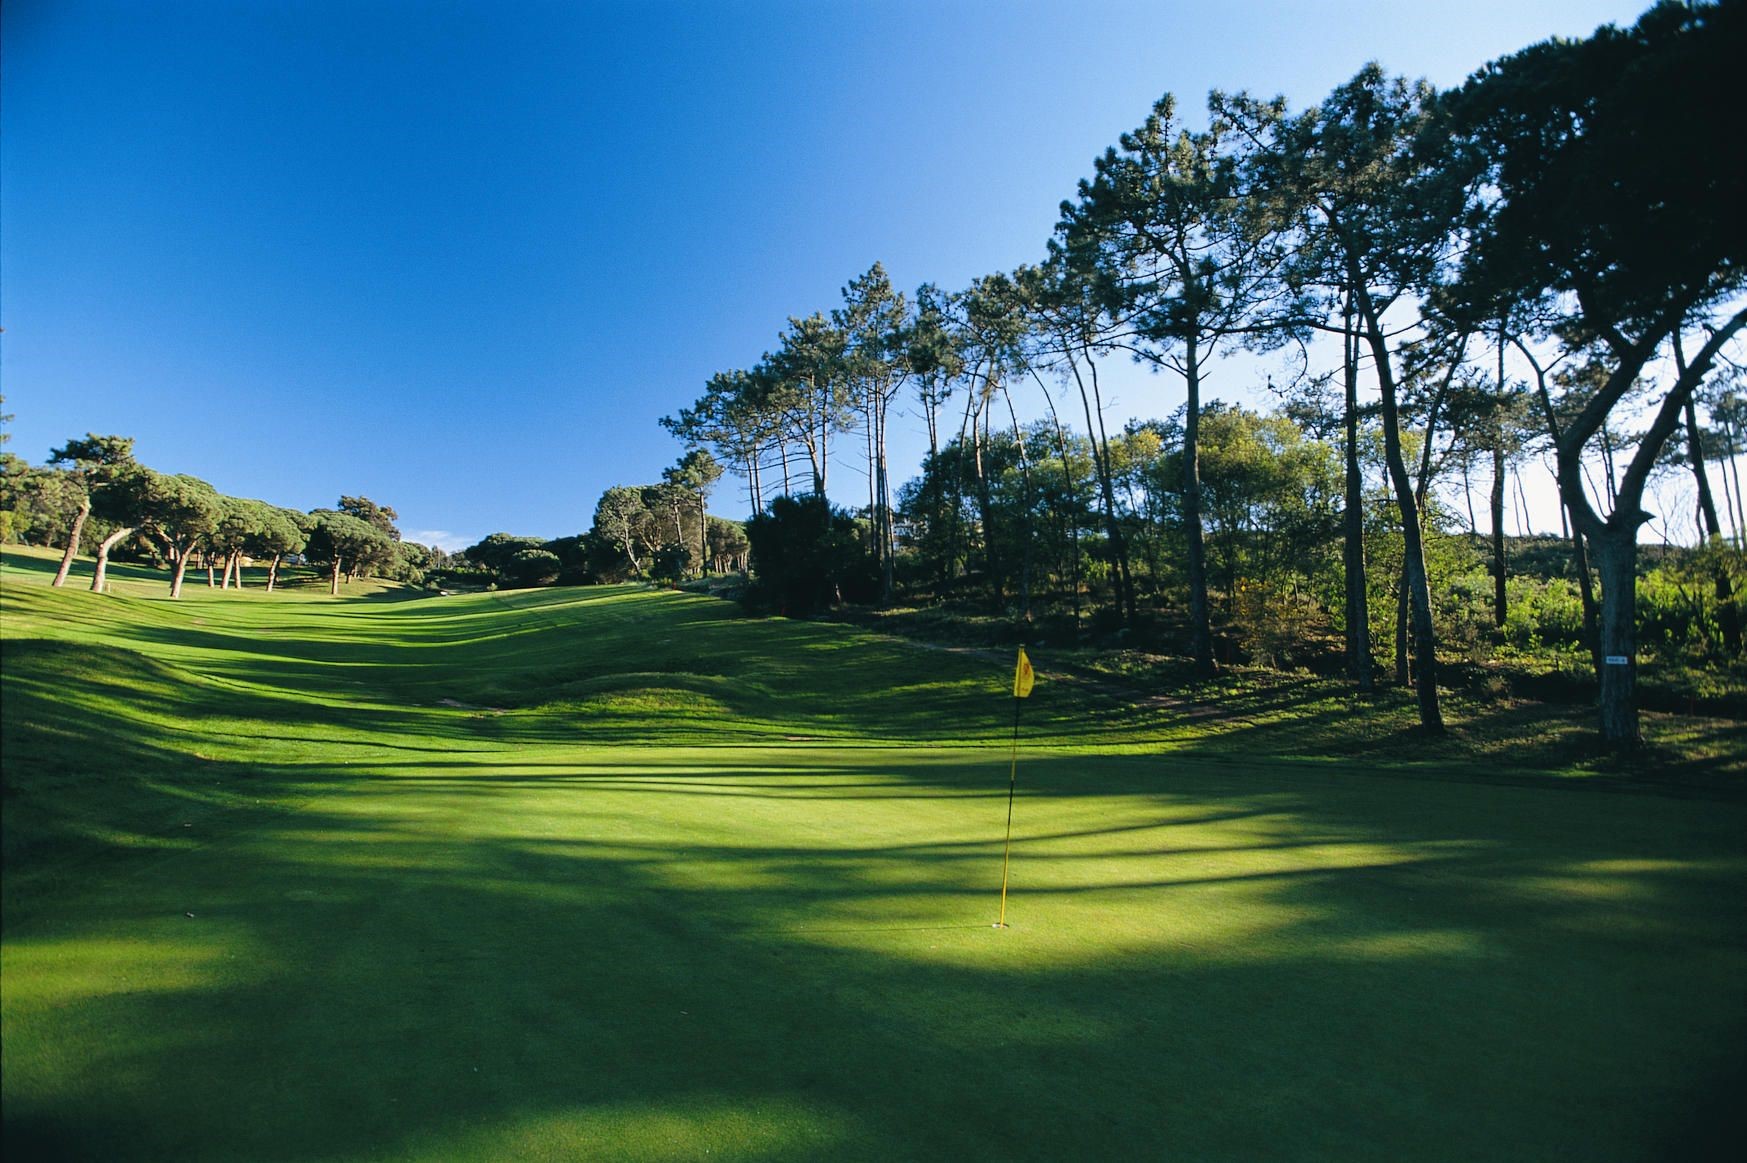 Cascais-Estoril (Lissabon), Portugal, Estoril Palacio Golf Course